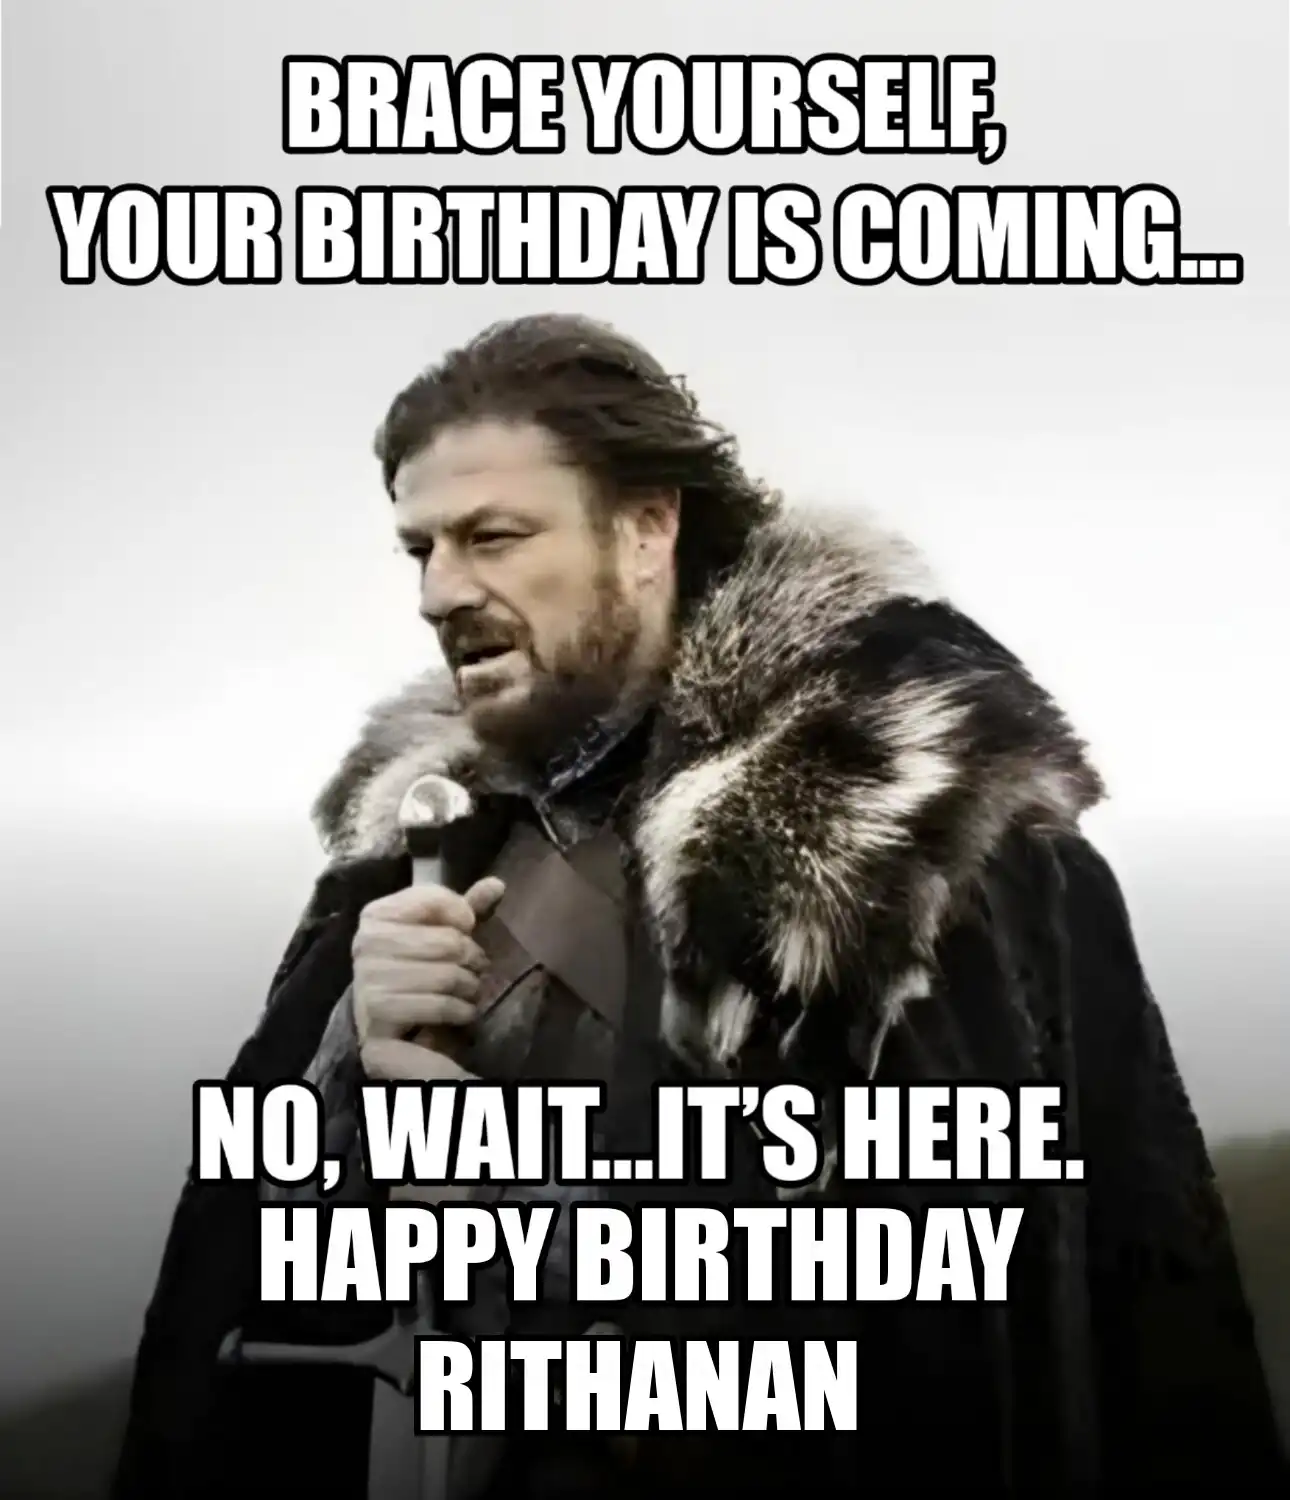 Happy Birthday Rithanan Brace Yourself Your Birthday Is Coming Meme